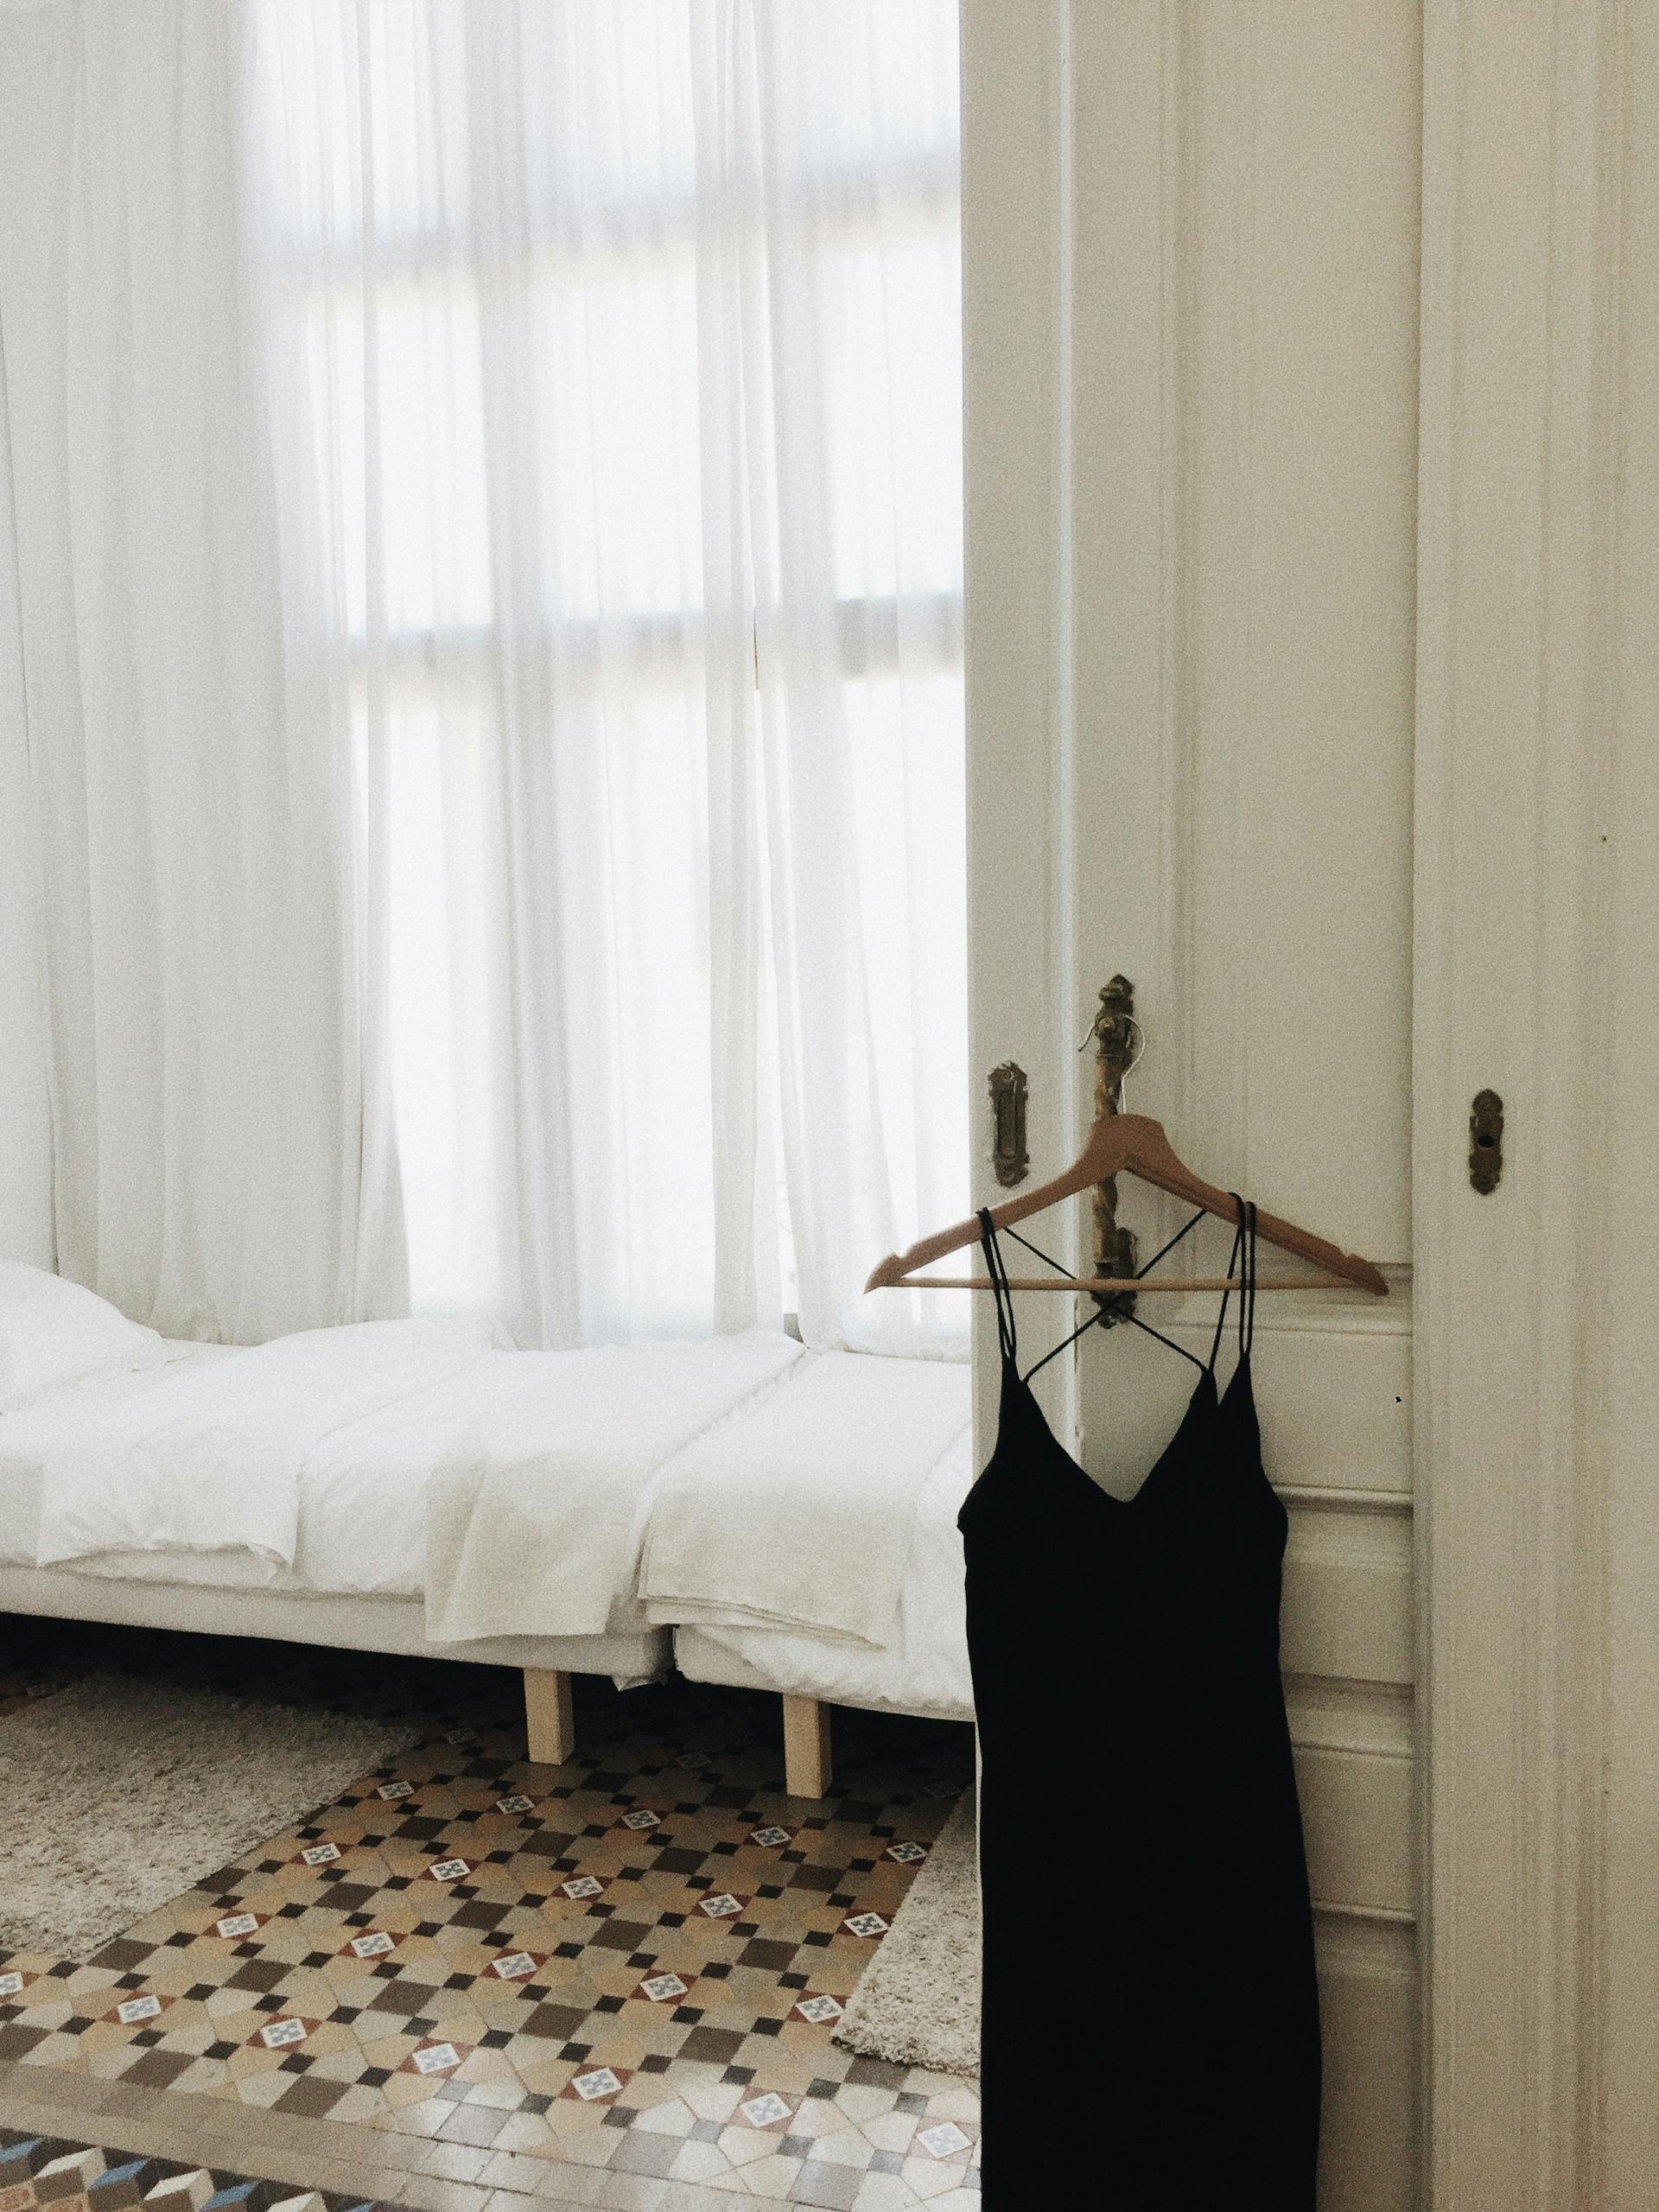 A black dress on a hanger | Source: Pexels